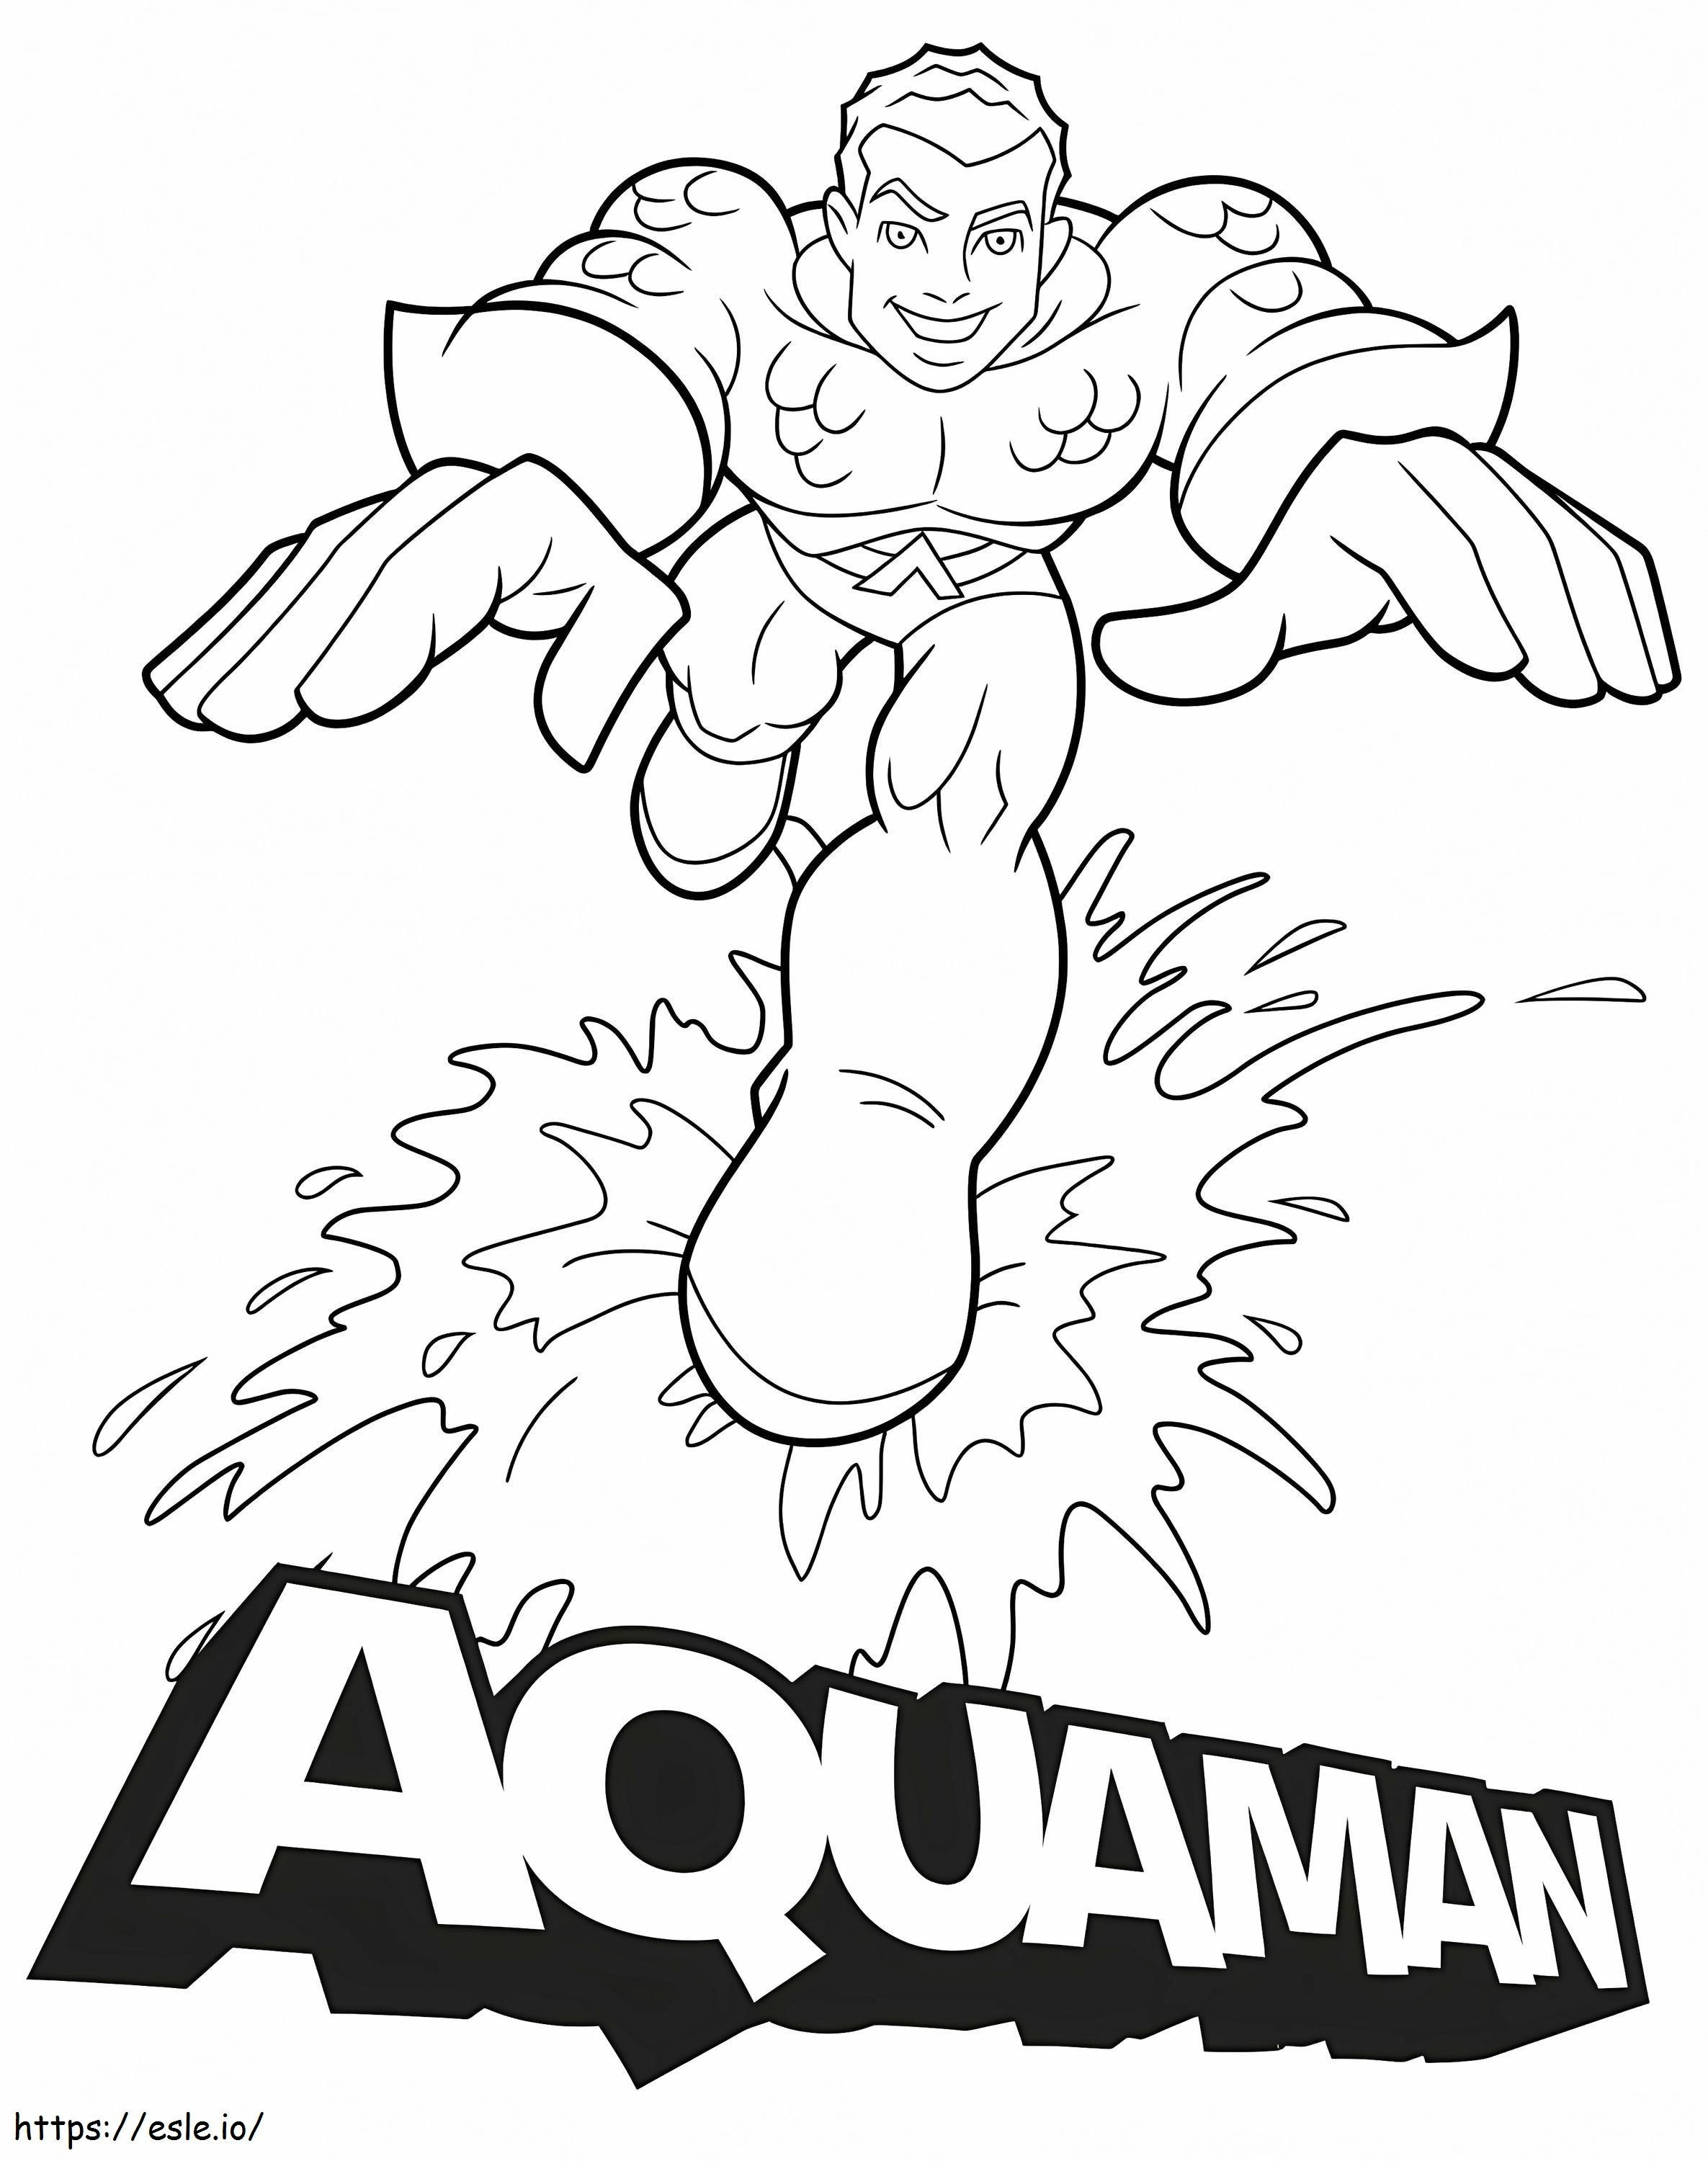 Aquaman 12 kolorowanka